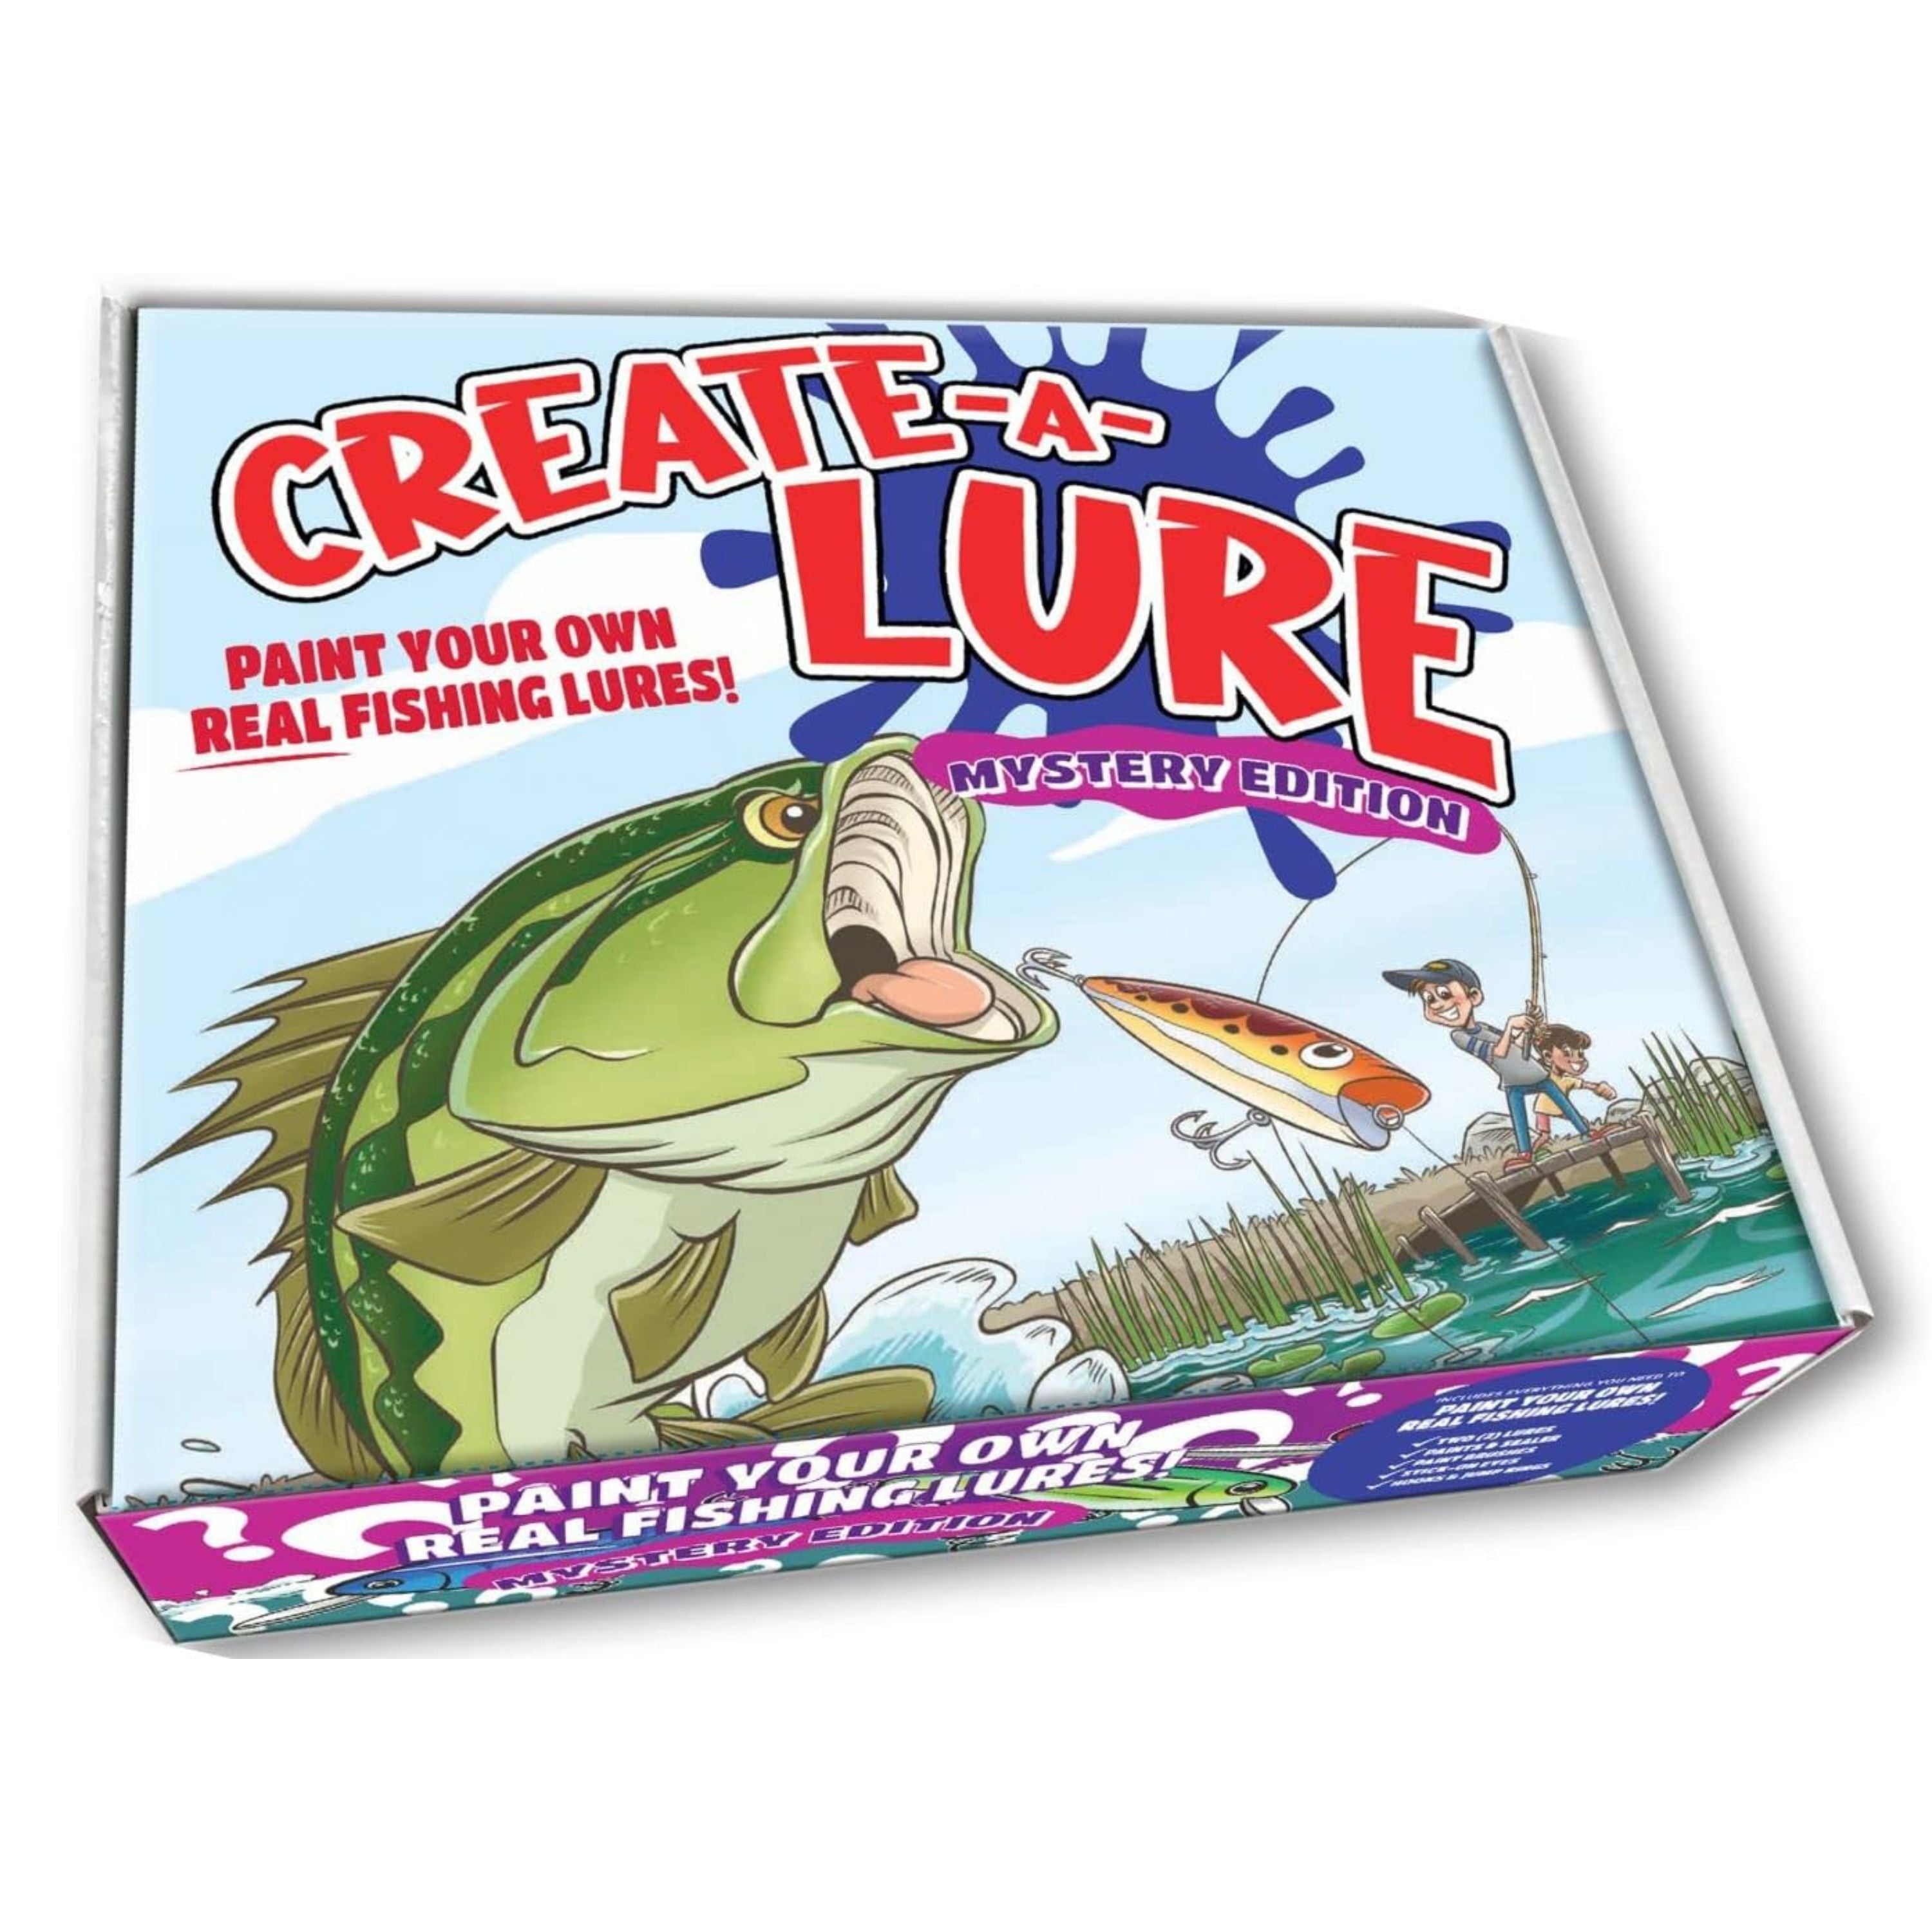 "Create-a-lure" Mystery box